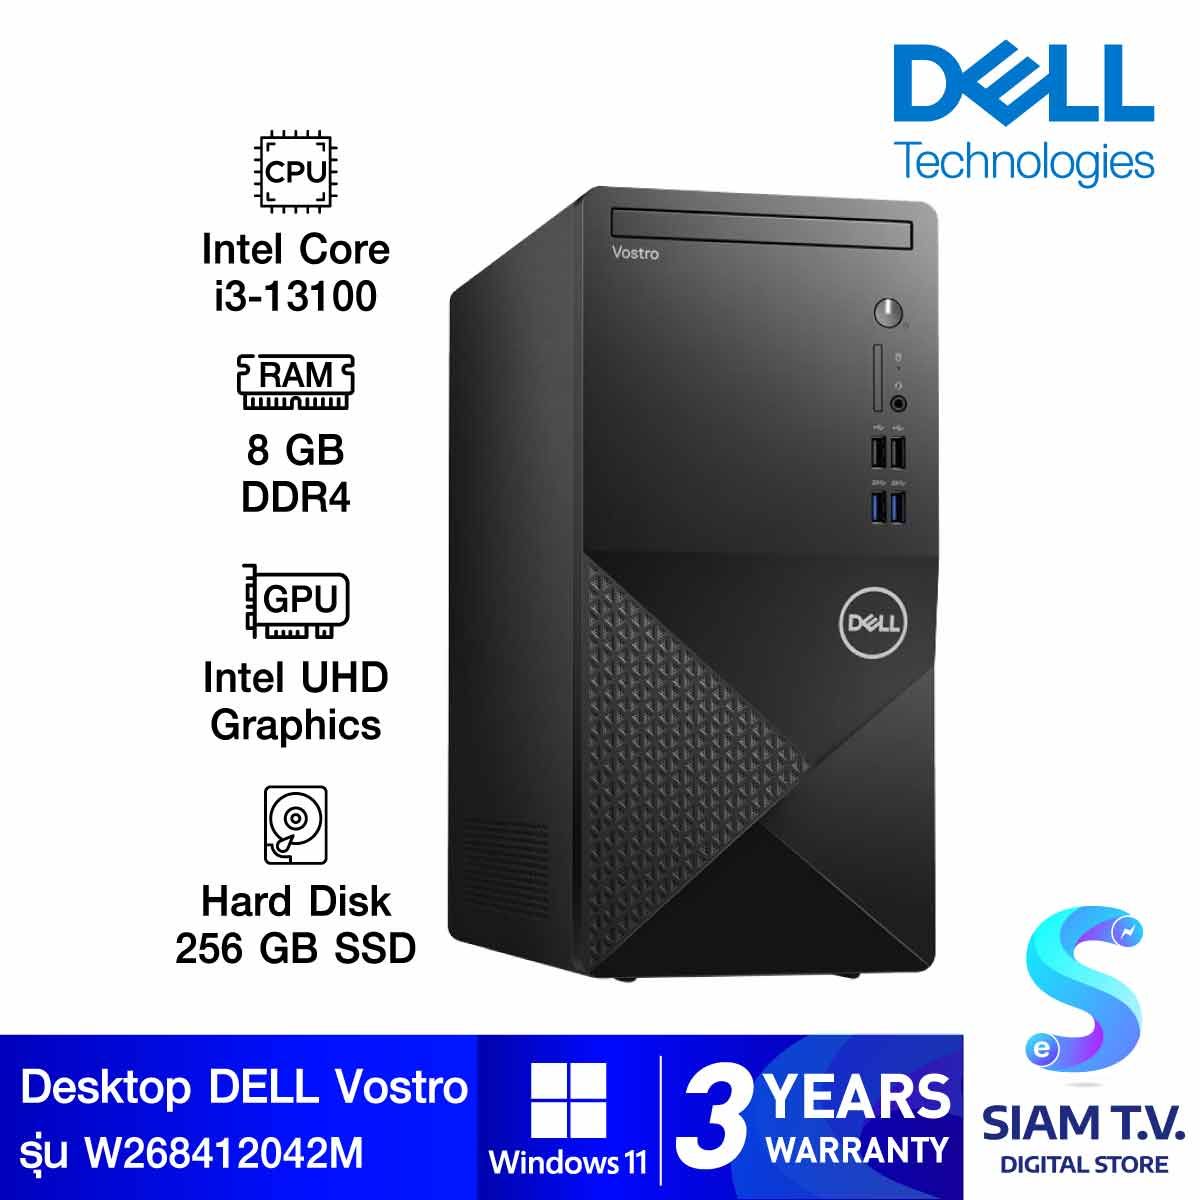 DESKTOP PC (คอมพิวเตอร์ตั้งโต๊ะ) DELL VOSTRO 3020MT-W268412042MTH